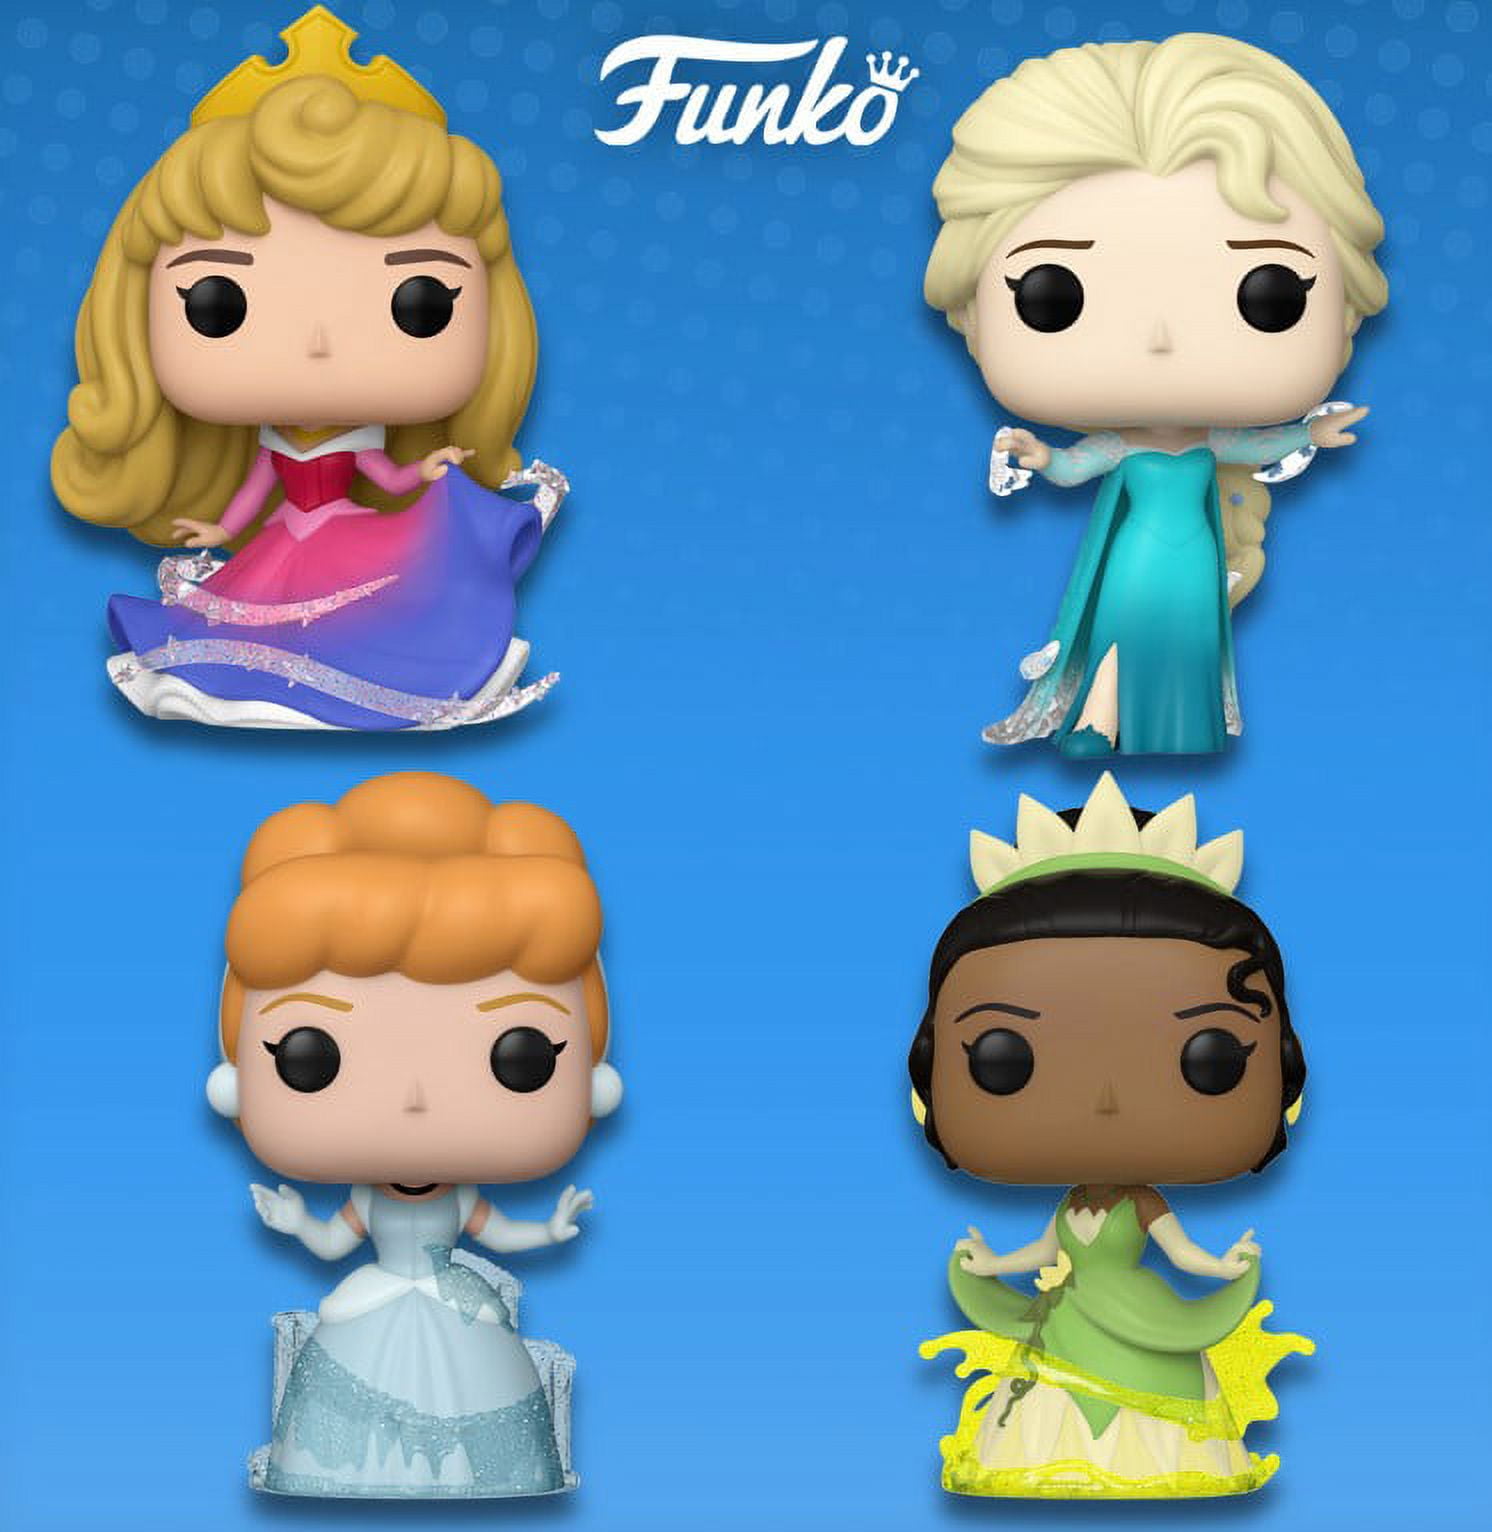 Funko Pop! Disney100 Princess Mid-Transformation Figures Available